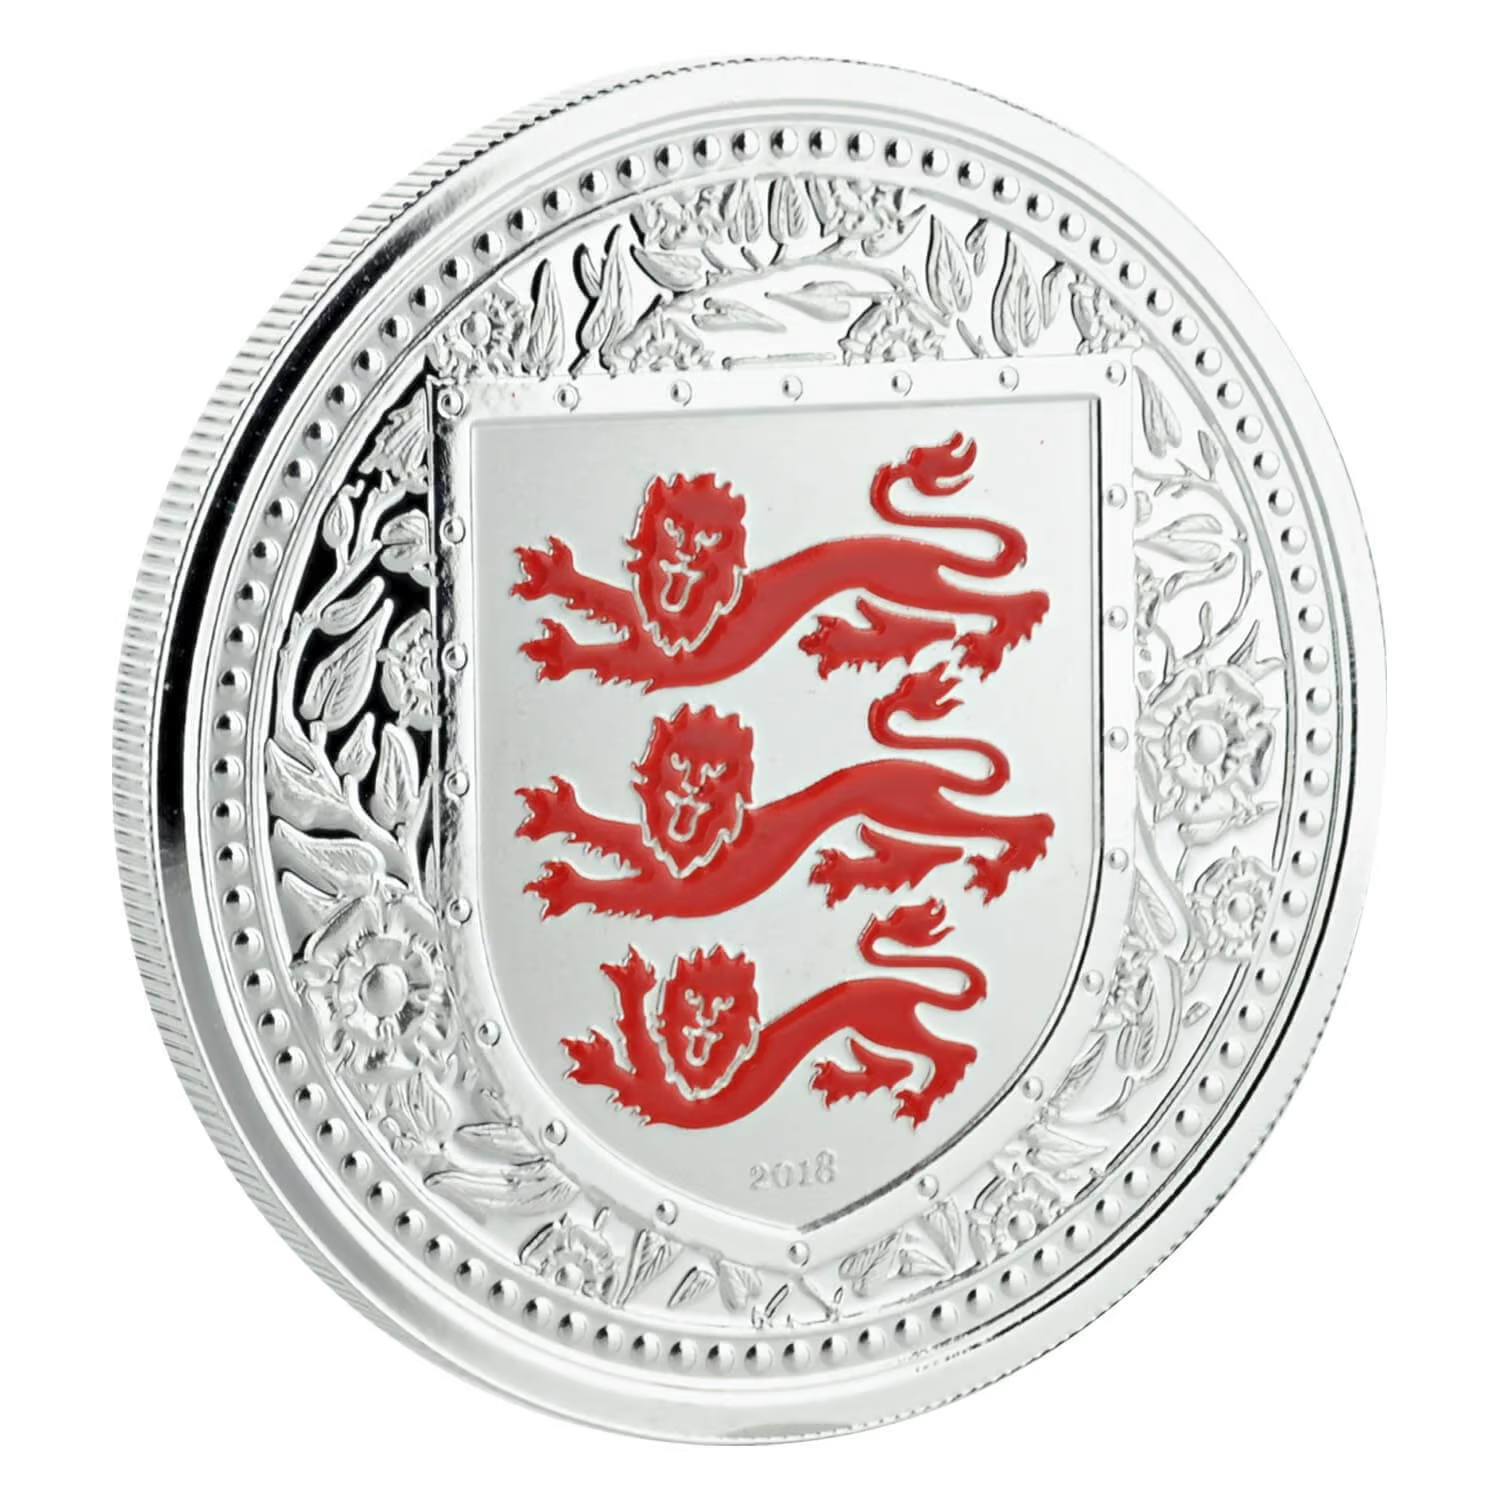 1 Oz Silver Coin 2018 Gibraltar £2 Royal Arms of England Color Proof - Red-classypw.com-2